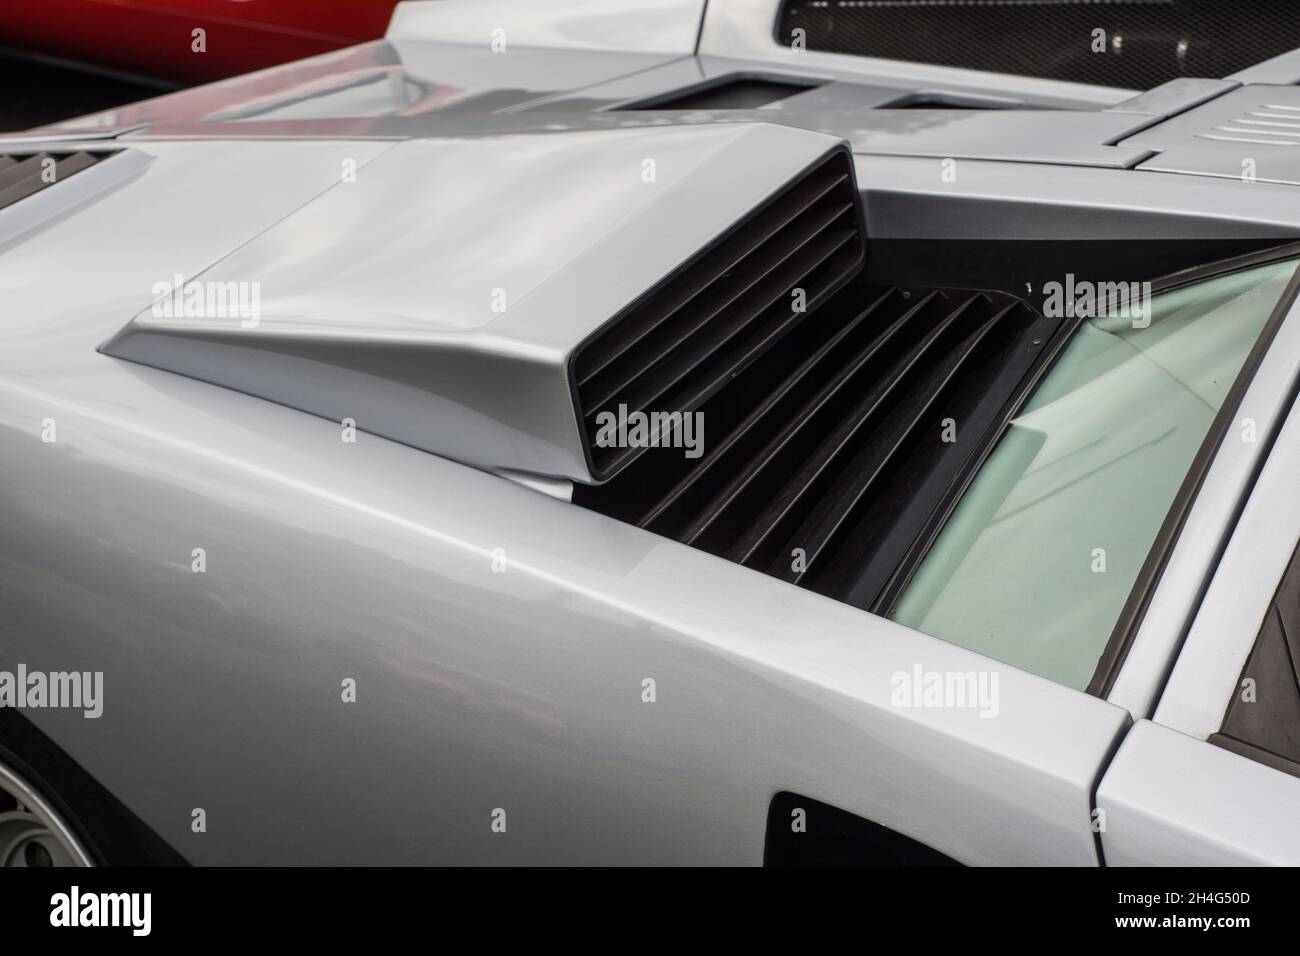 Close up detail of engine air vents on a silver Lamborghini Countach LP400 sports super car Stock Photo